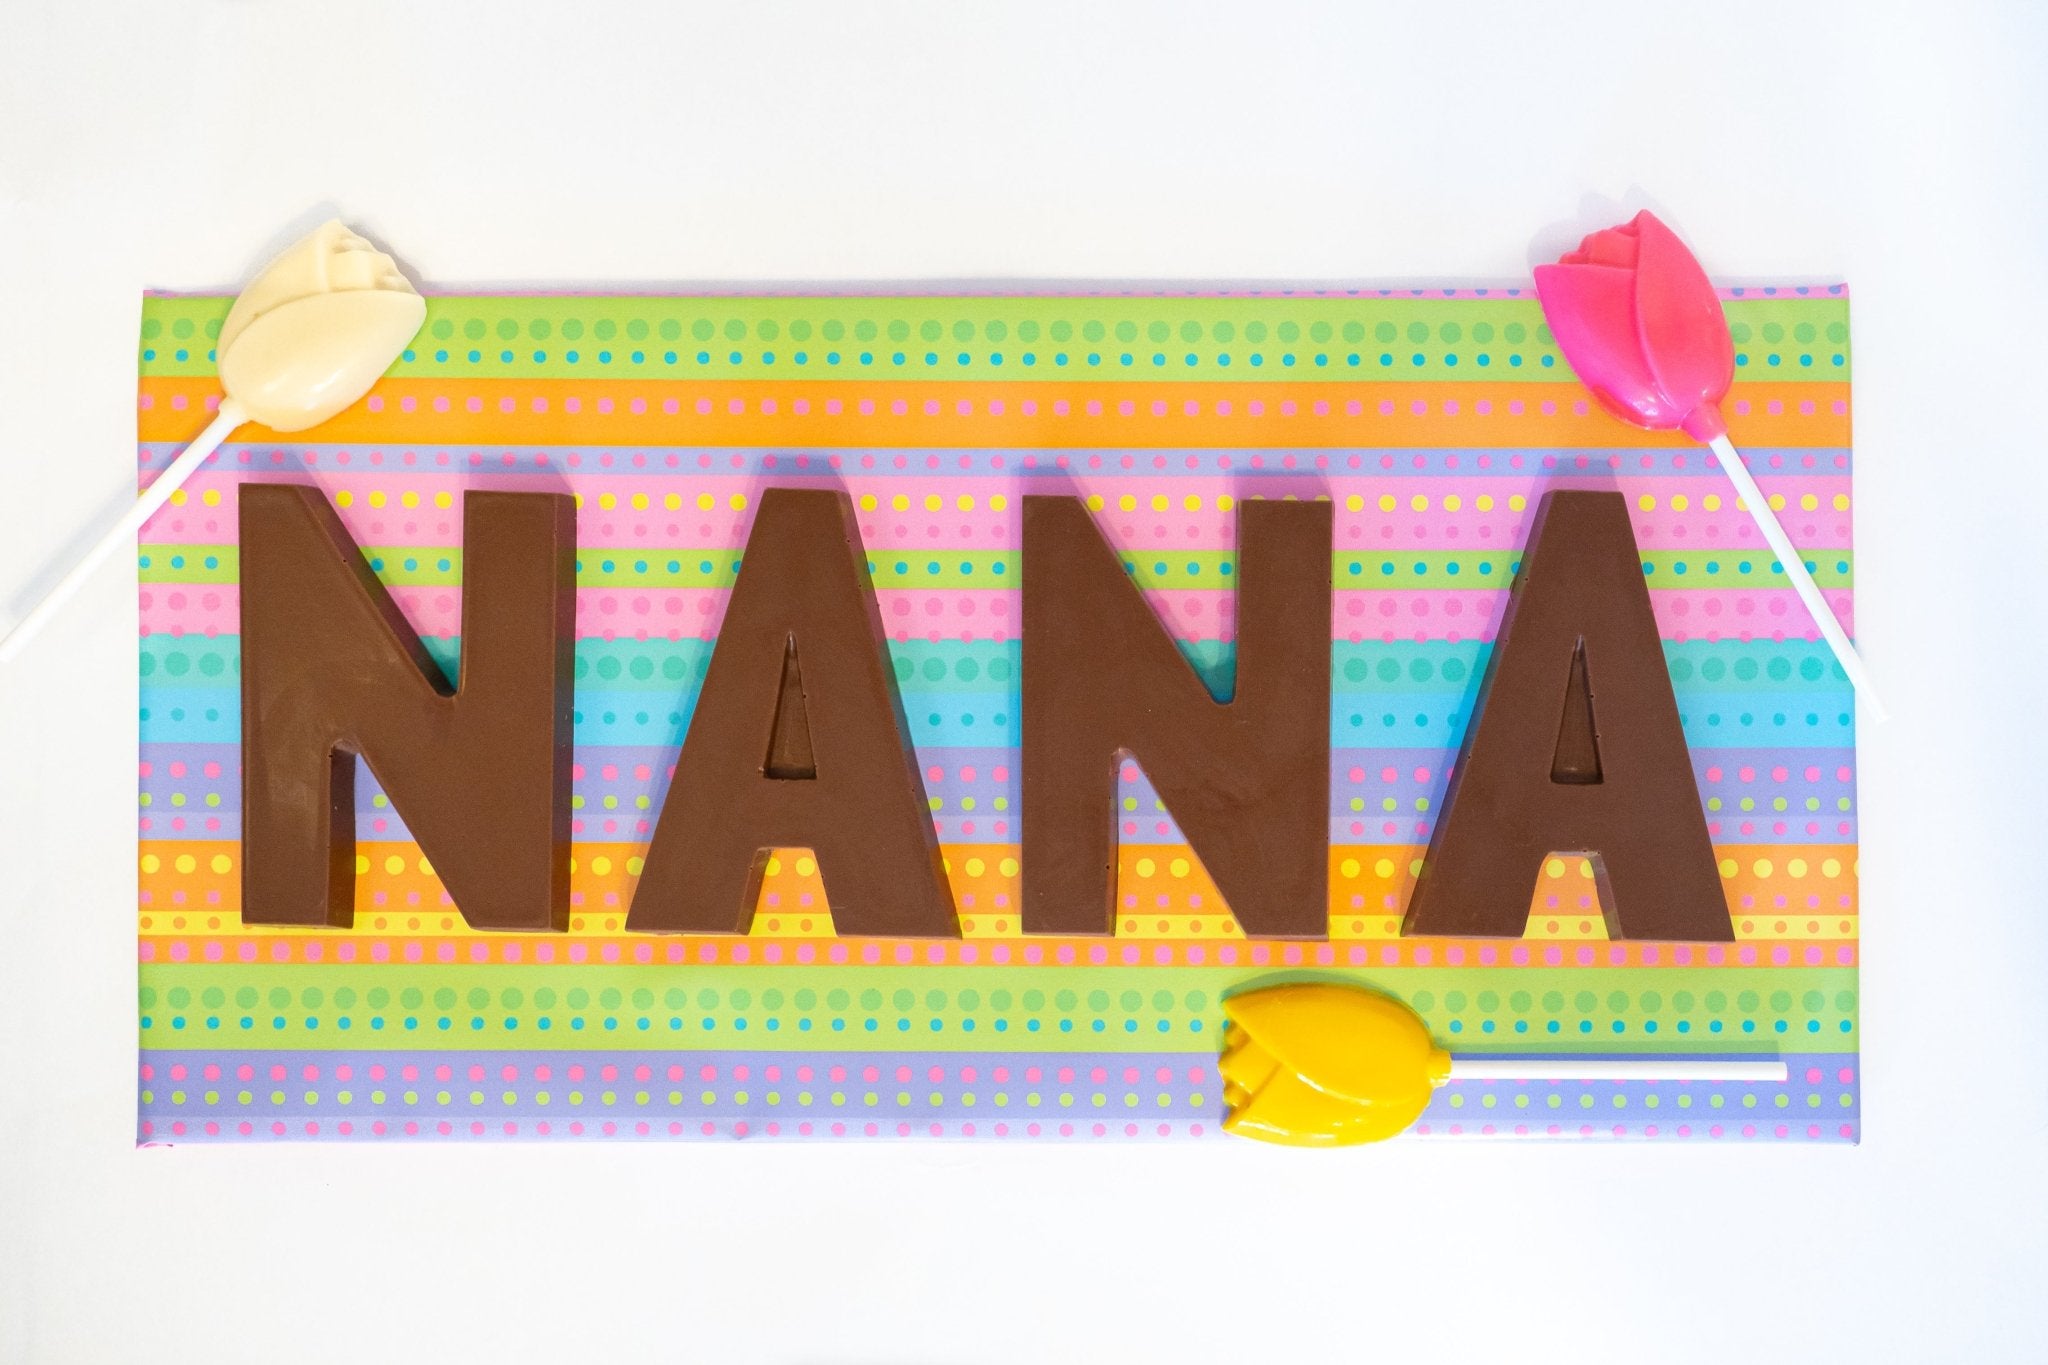 "Nana" in Chocolate - Nandy's Candy"Nana" in Chocolate